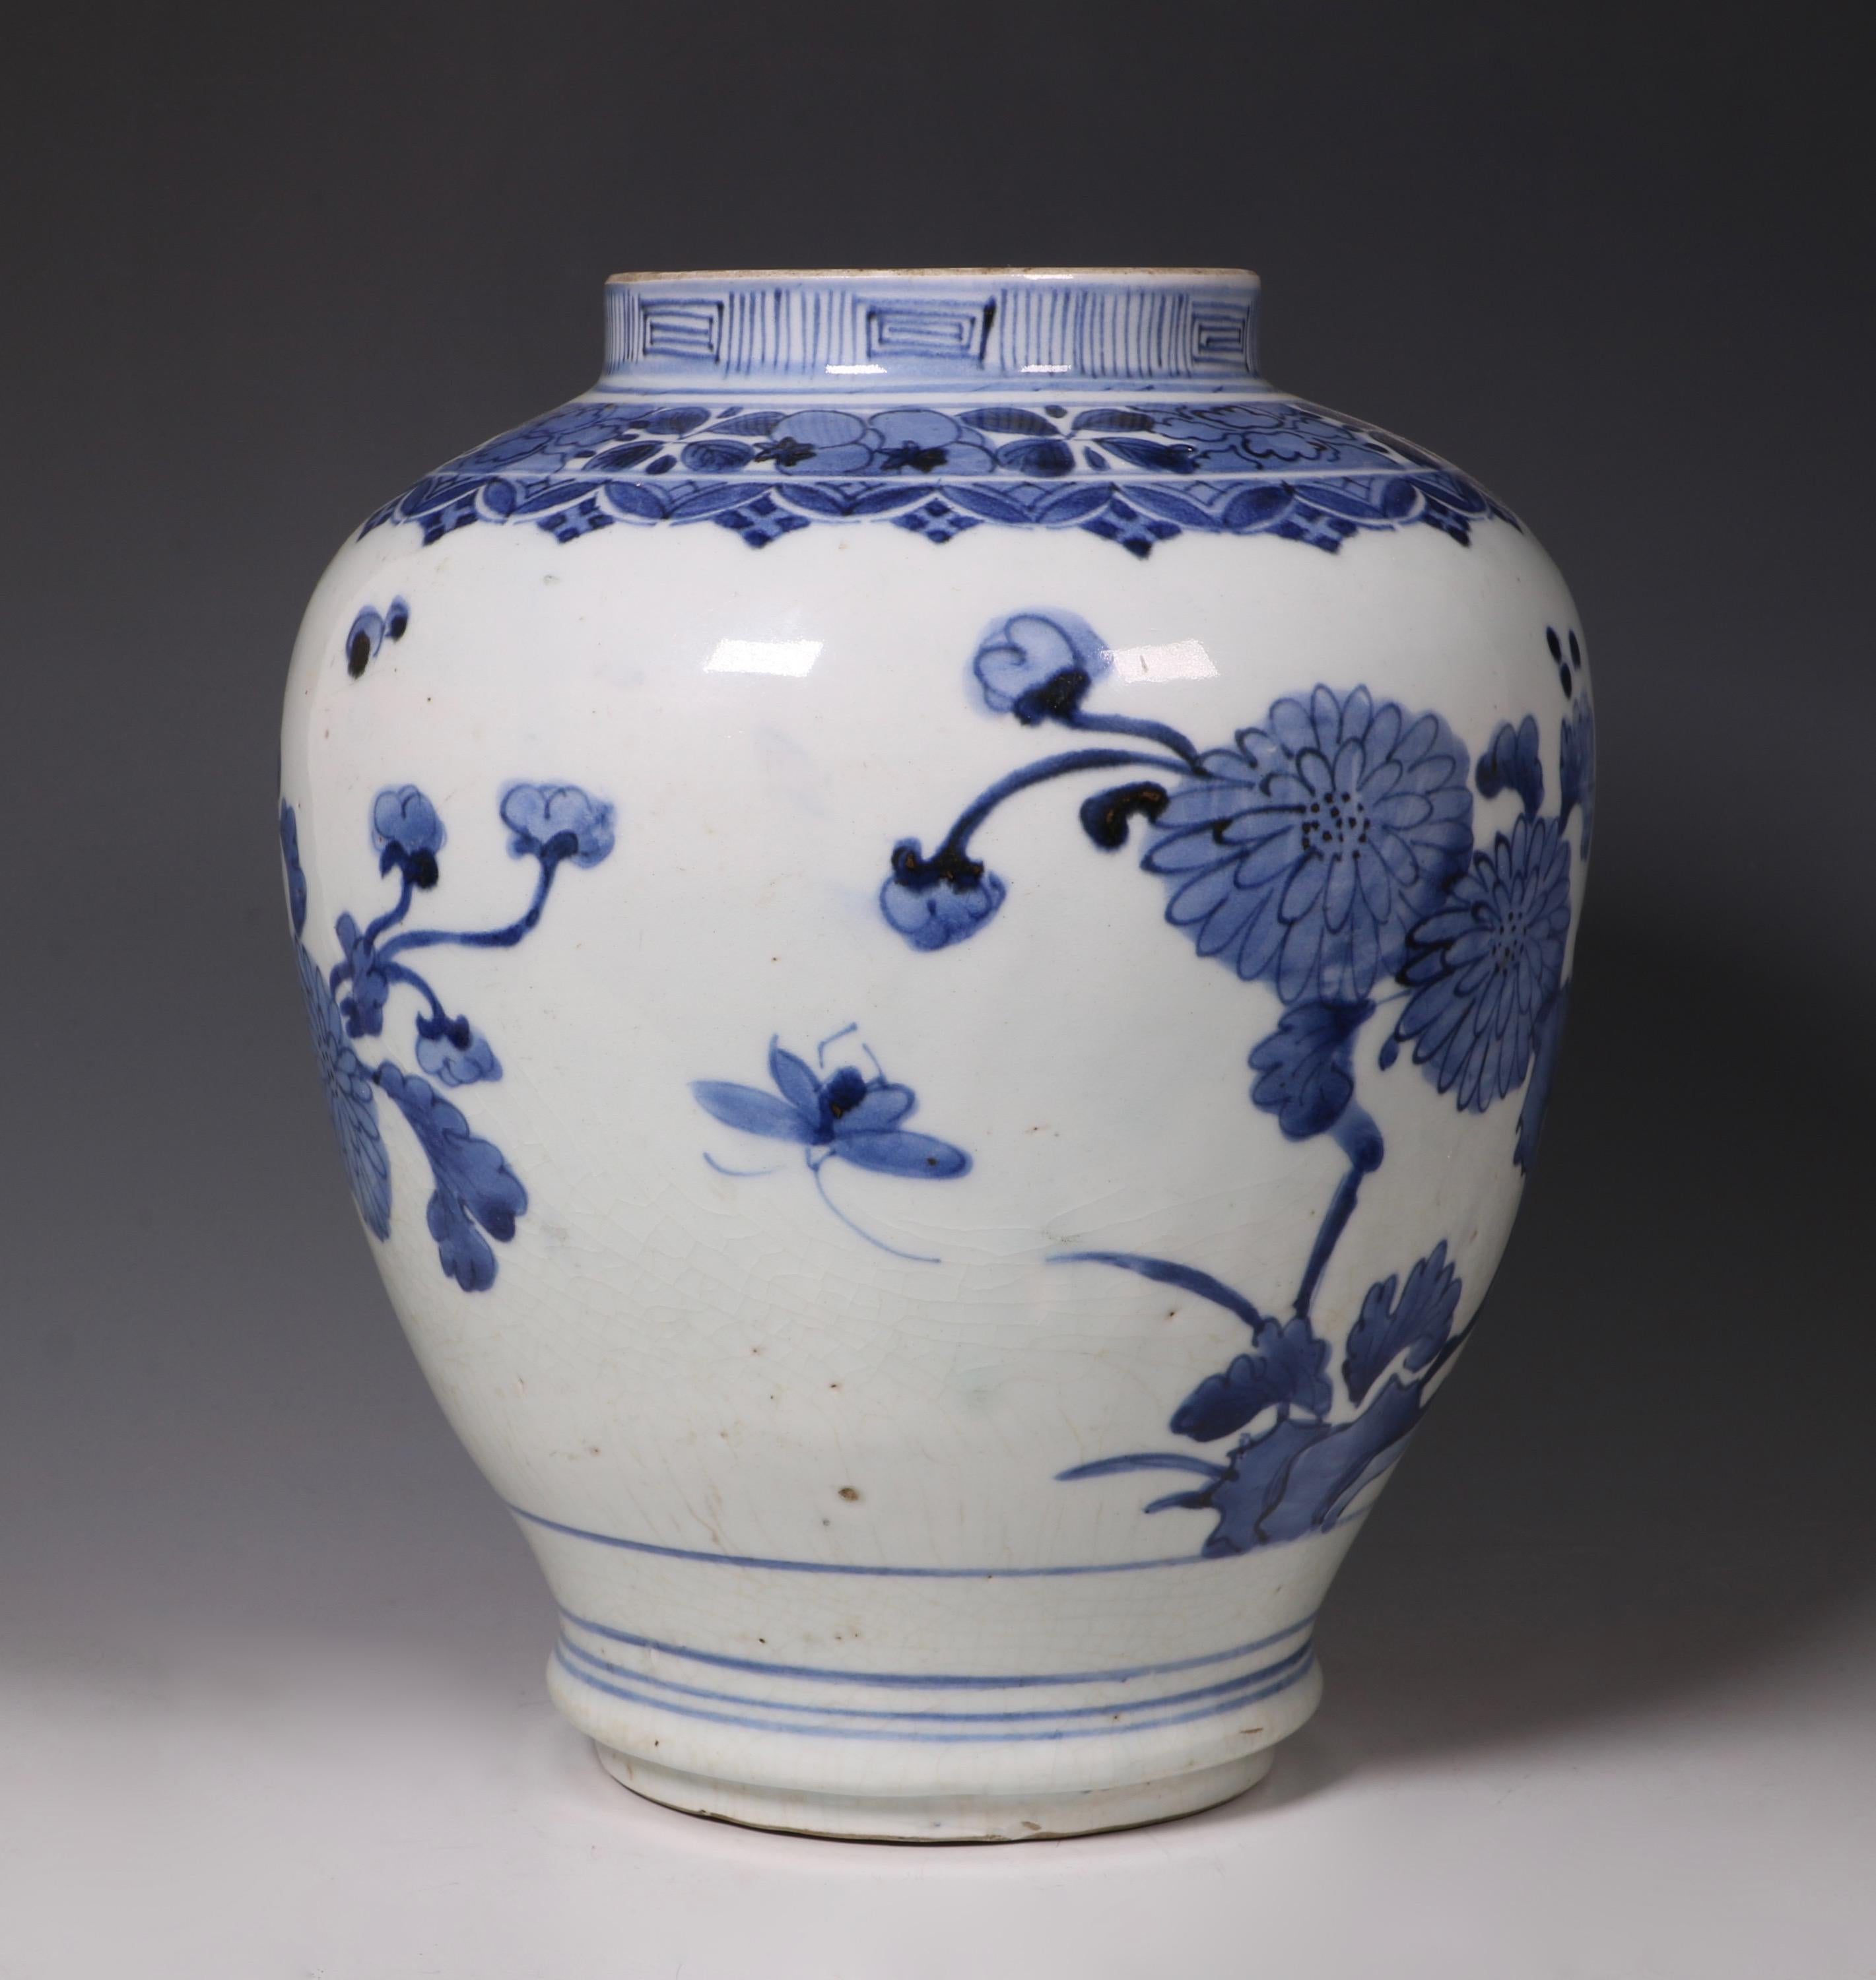 Glazed An Arita Blue and White Vase L, 17th Century